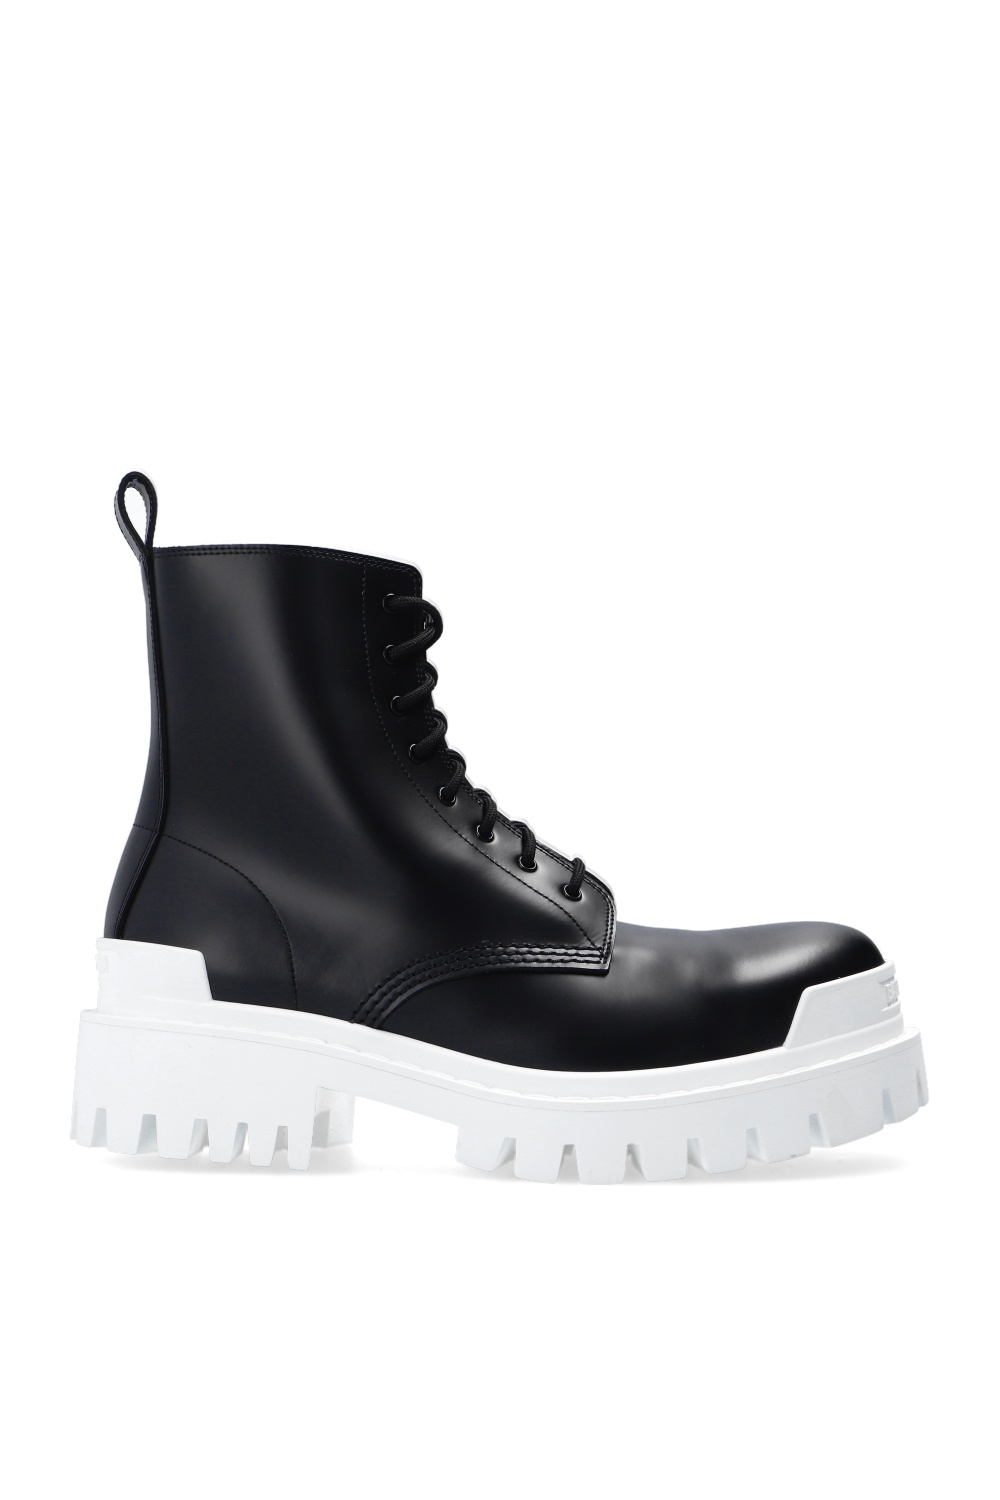 Women's Shoes | Balenciaga 'Strike' leather boots | IetpShops 